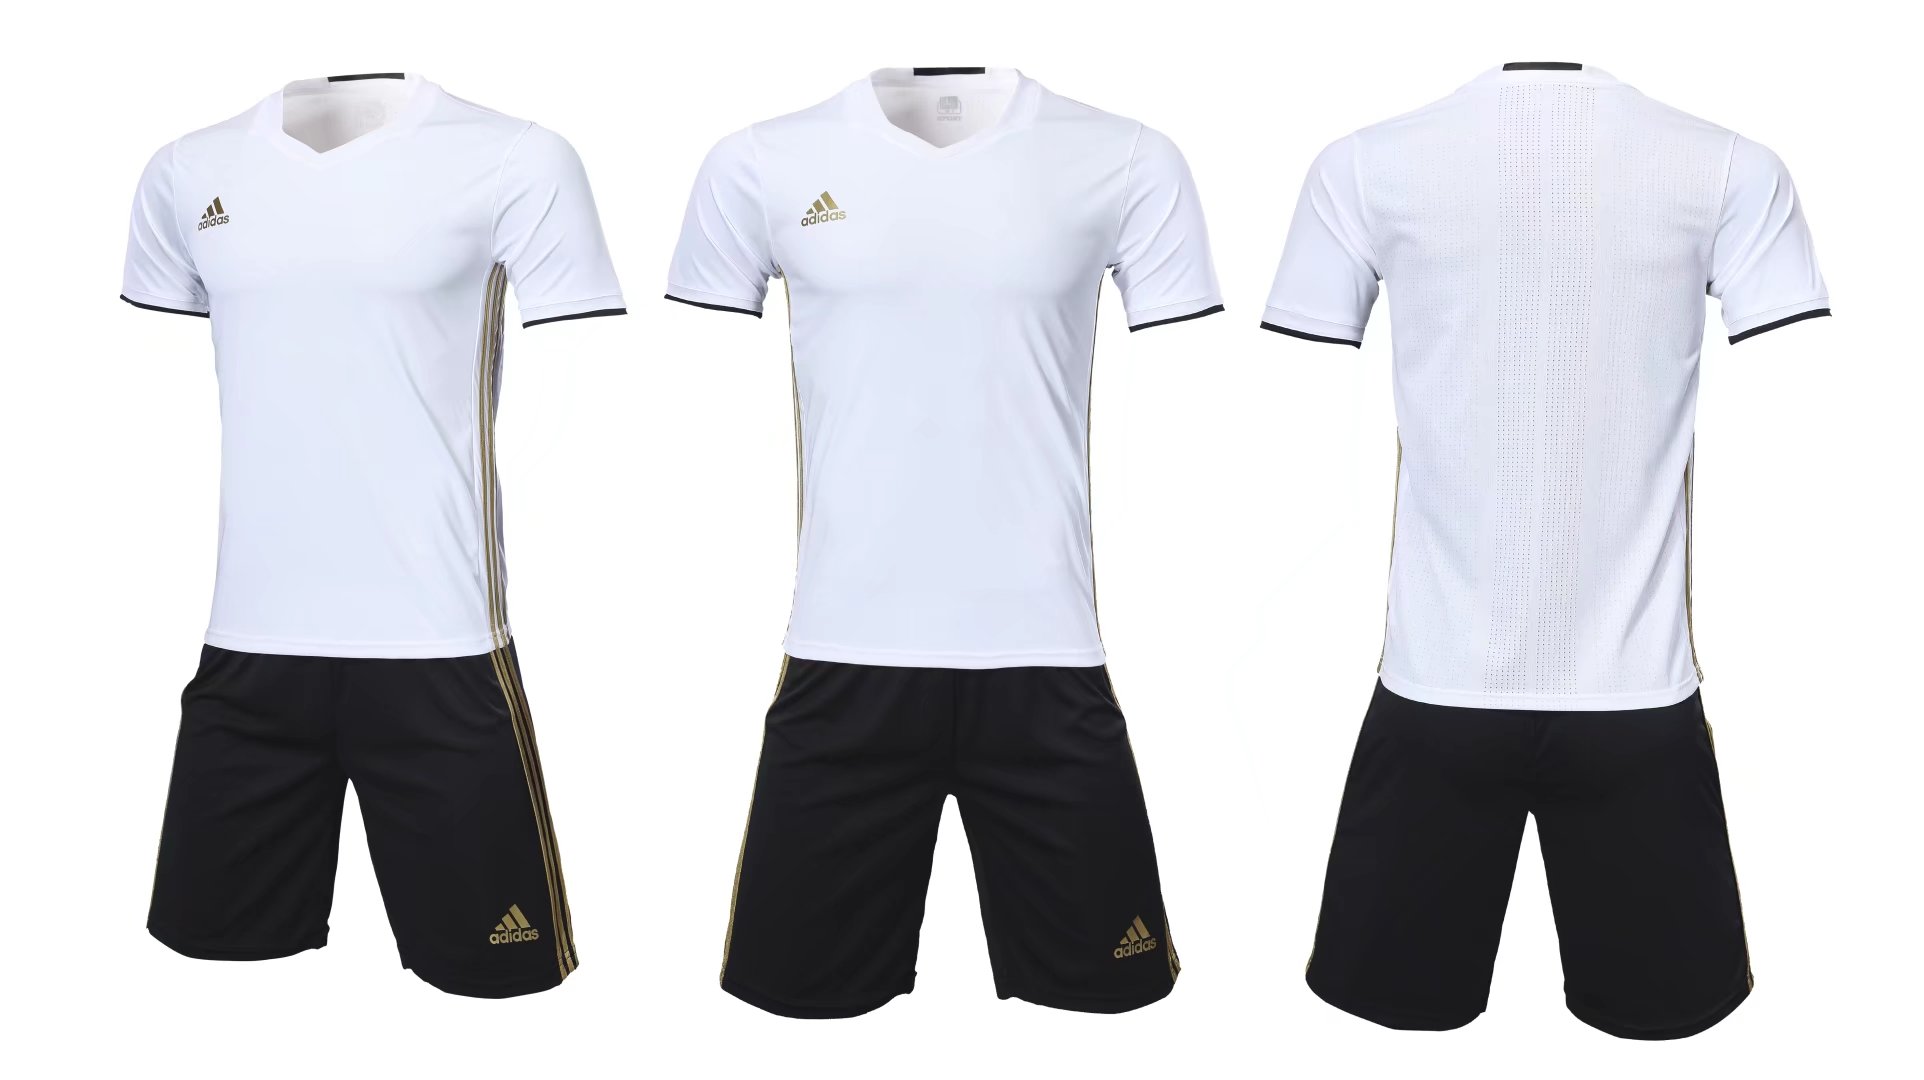 Adidas Soccer Team Uniforms 040